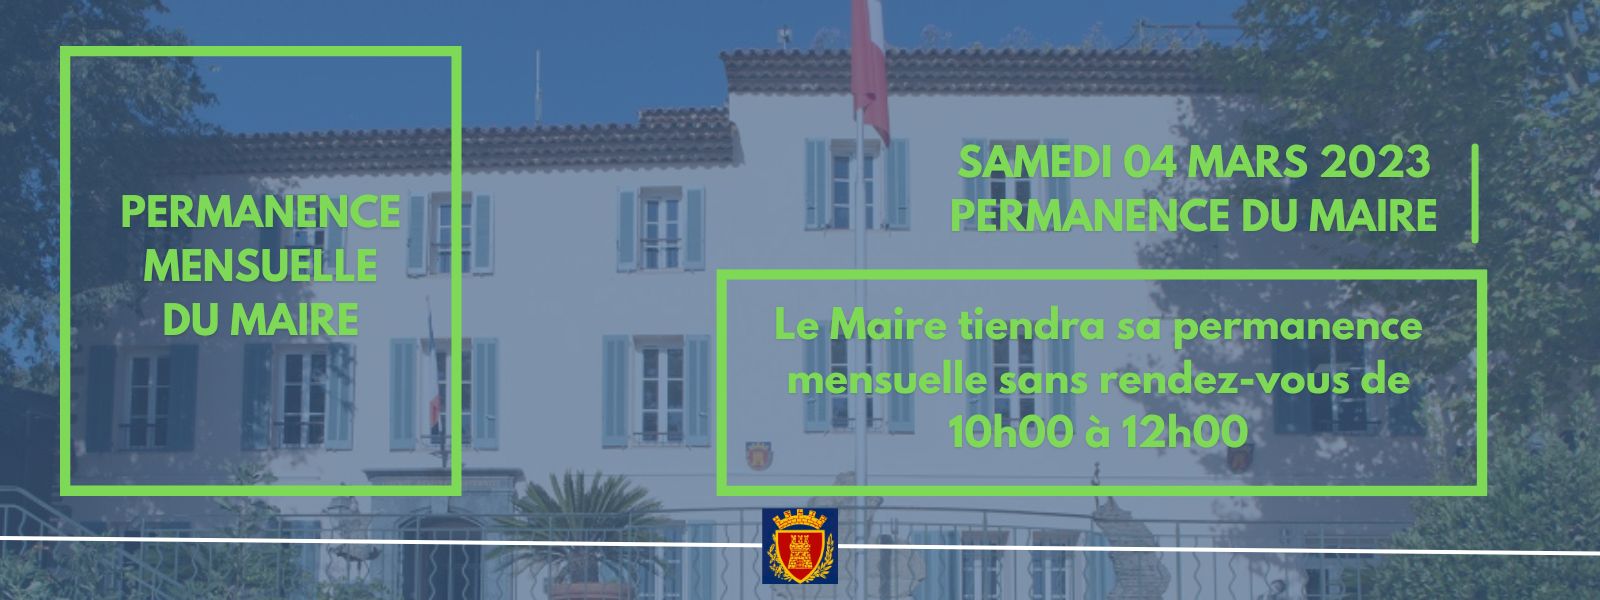 Samedi 04 mars 2023 : permanence mensuelle du Maire